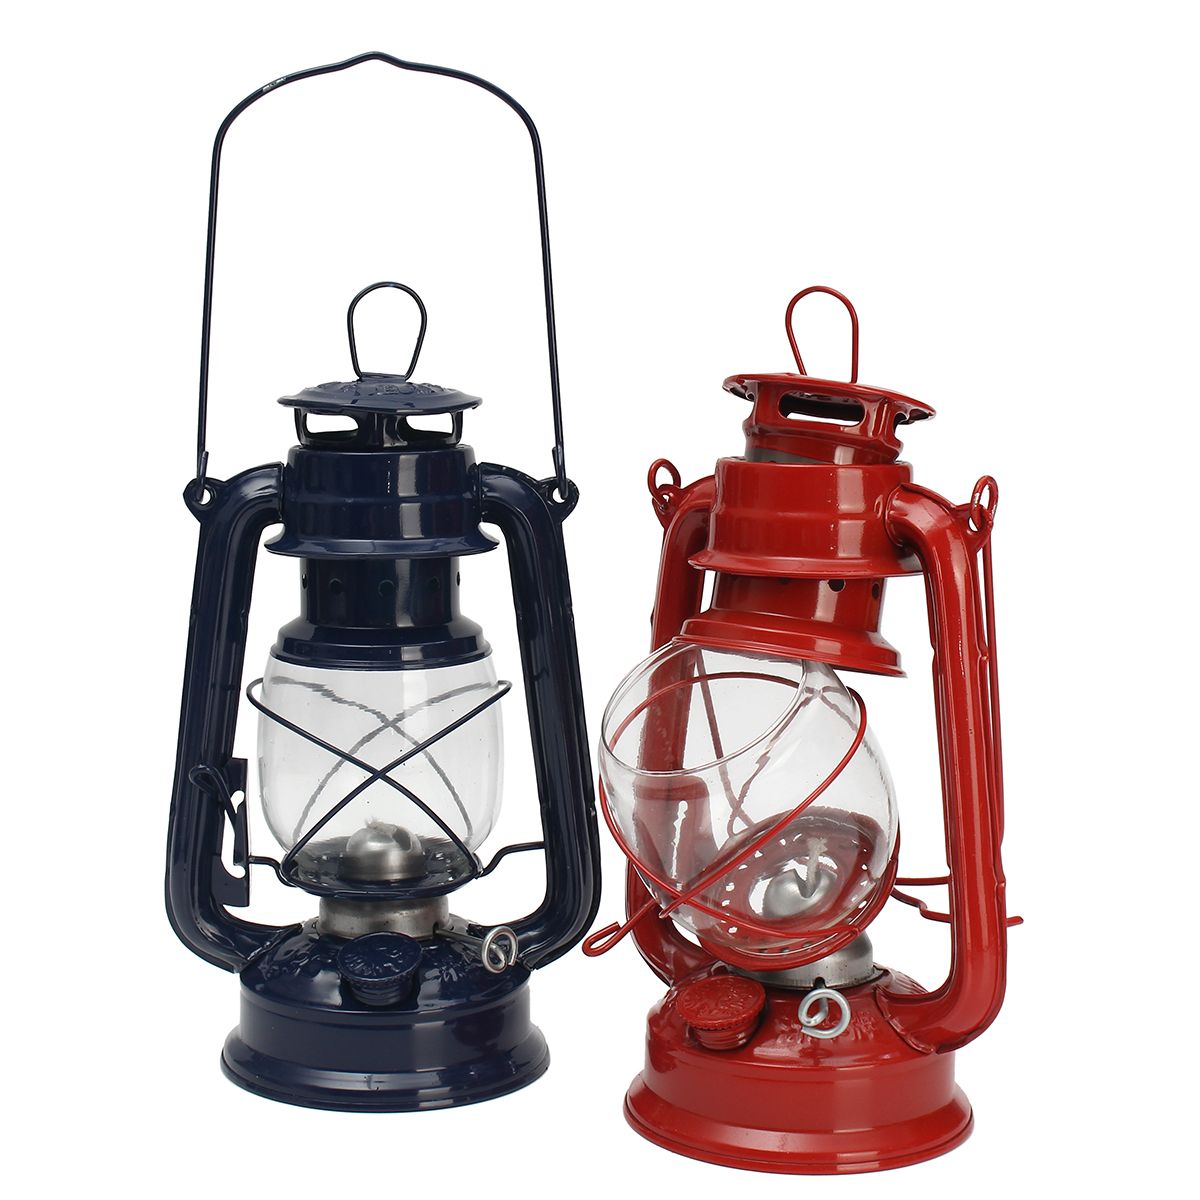 Vintage-Oil-Lamp-Lantern-Kerosene-Paraffin-Hurricane-Lamp-Light-Outdoor-Camping-1345072